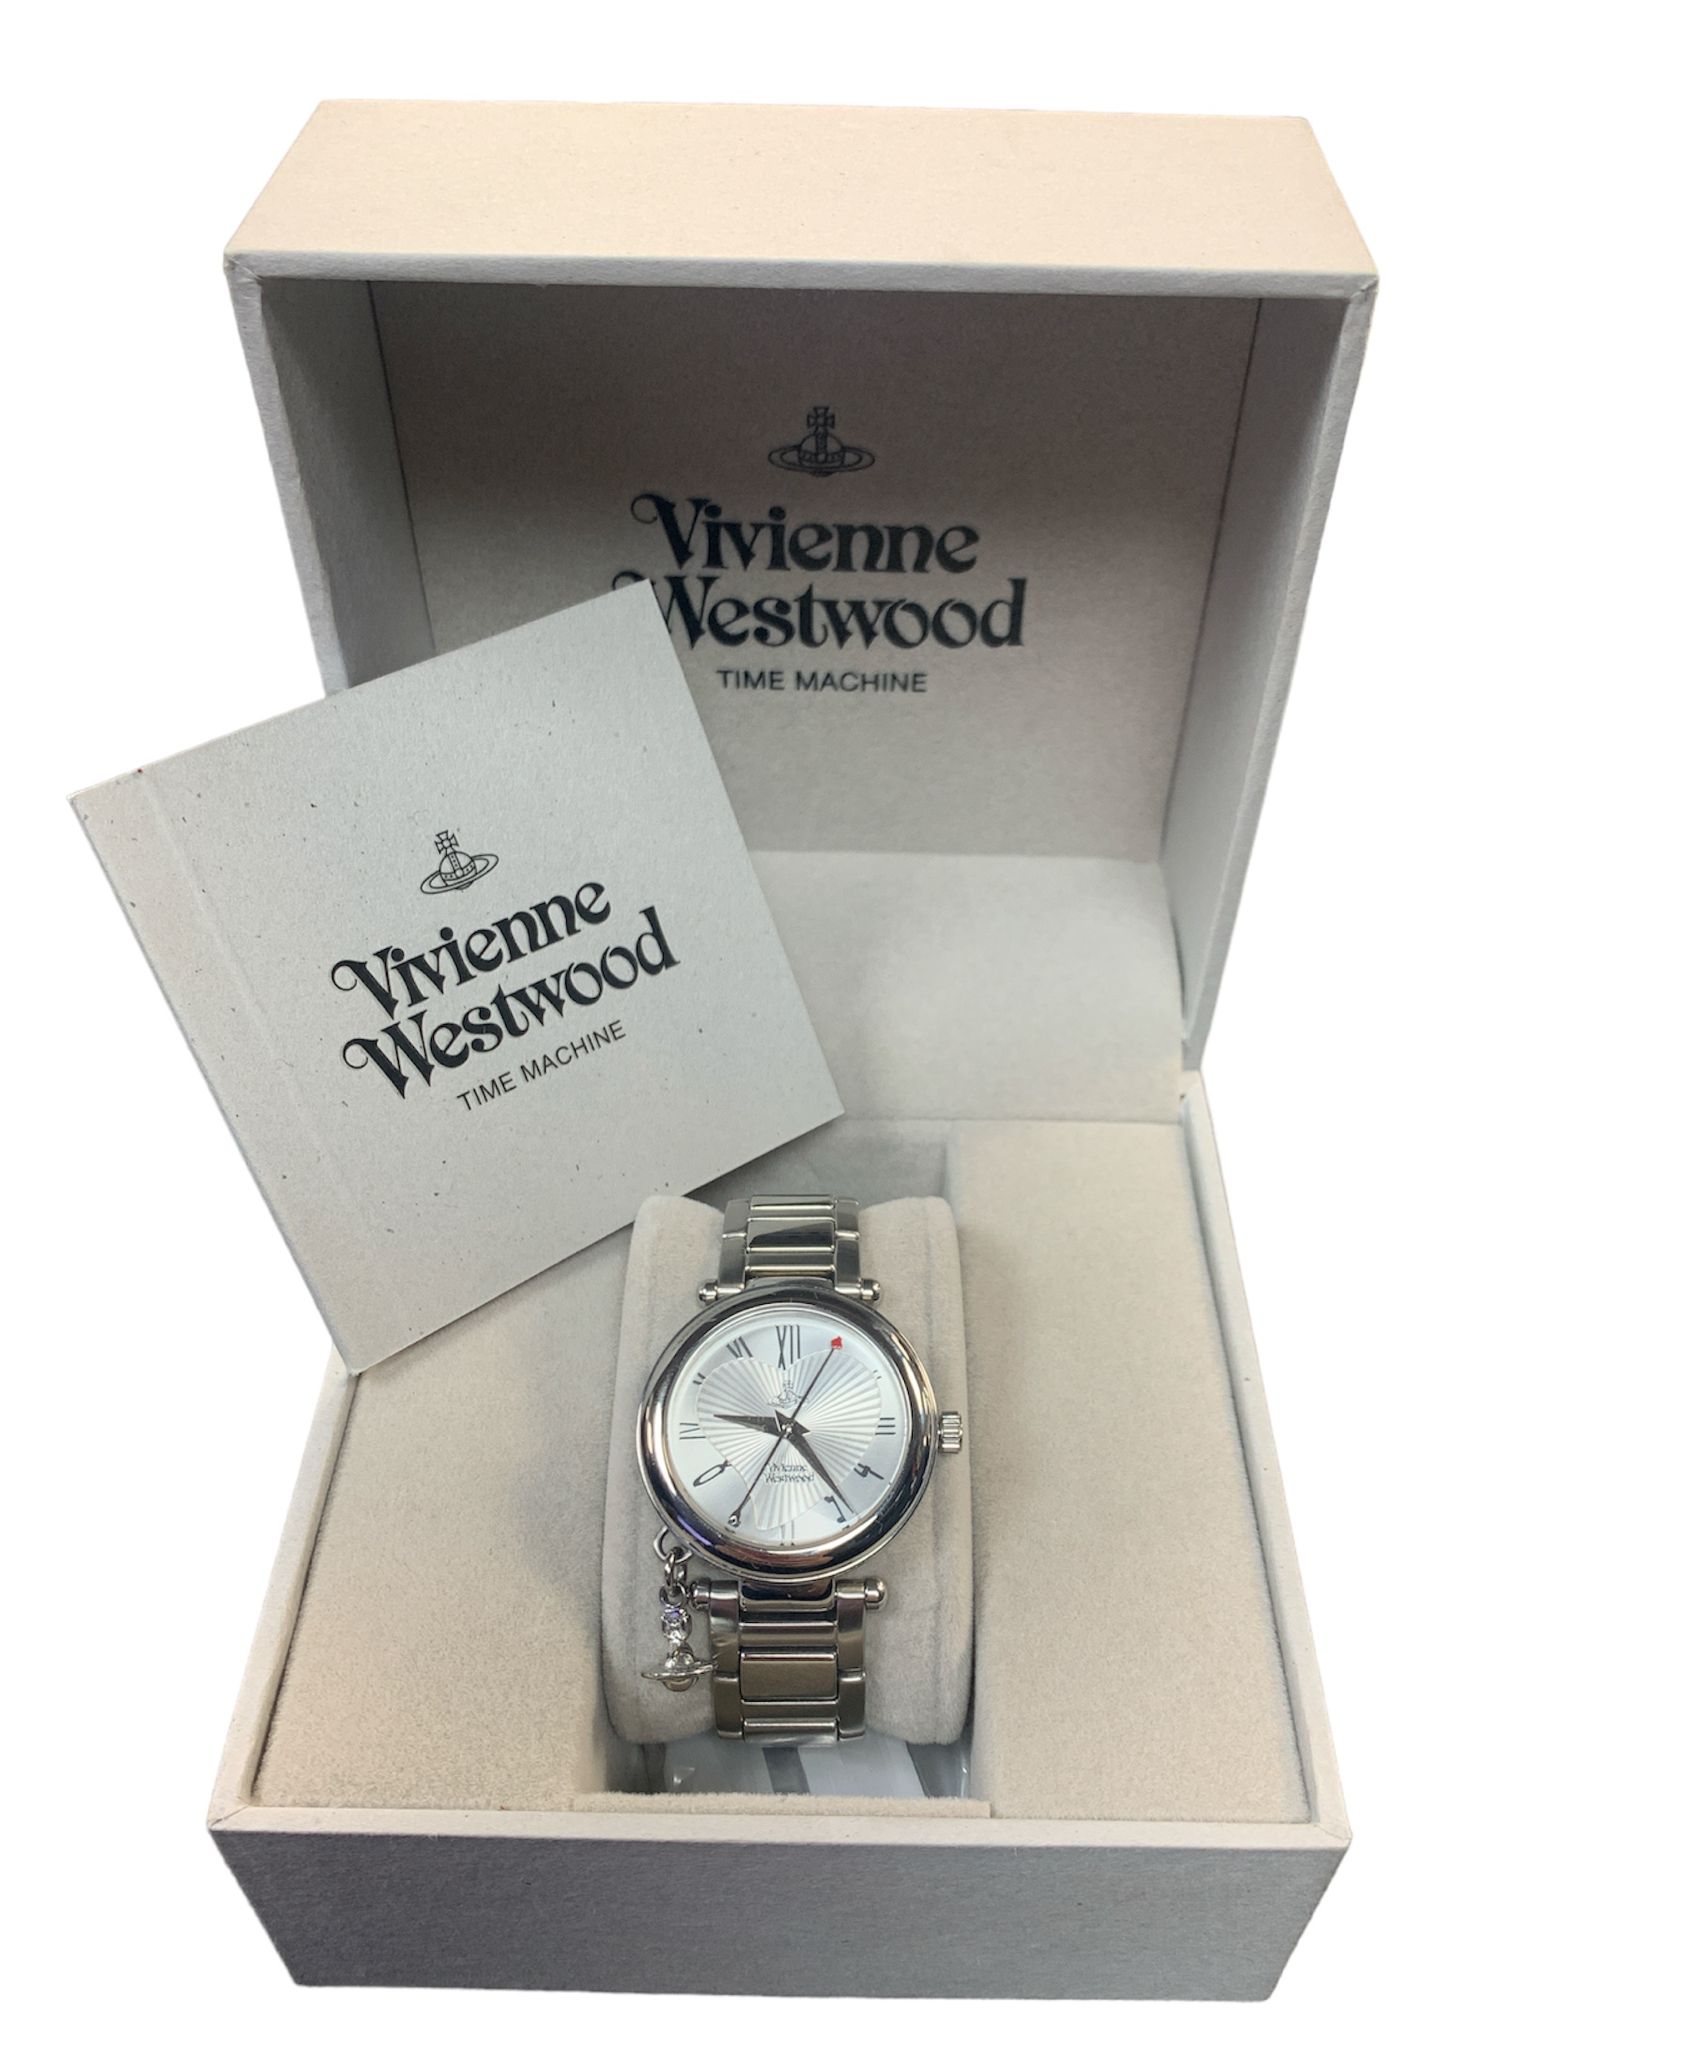 Vivienne Westwood TIME MACHINE 腕時計外箱に汚れシミがあります